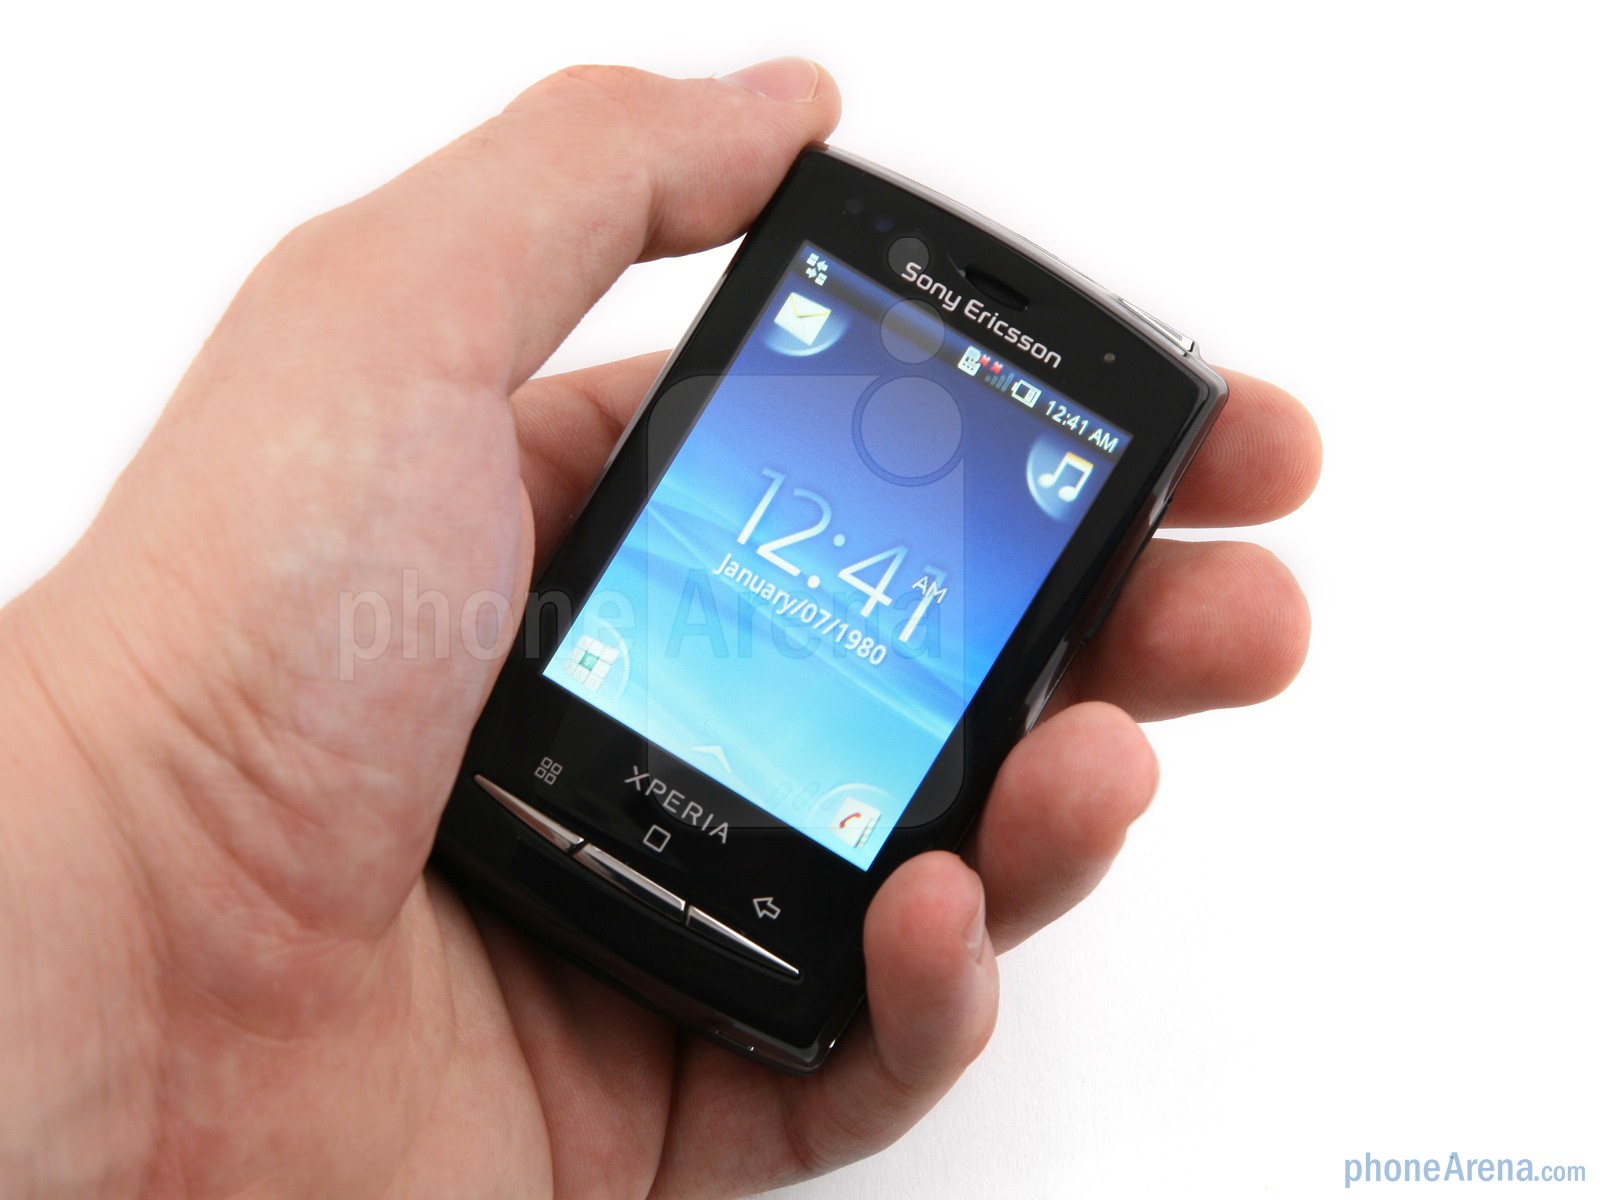 Sony xperia mini. Sony Xperia x10 Mini. Sony Xperia 10 Mini. Sony Ericsson Xperia x10 Mini. Sony Xperia x10 Mini Pro.